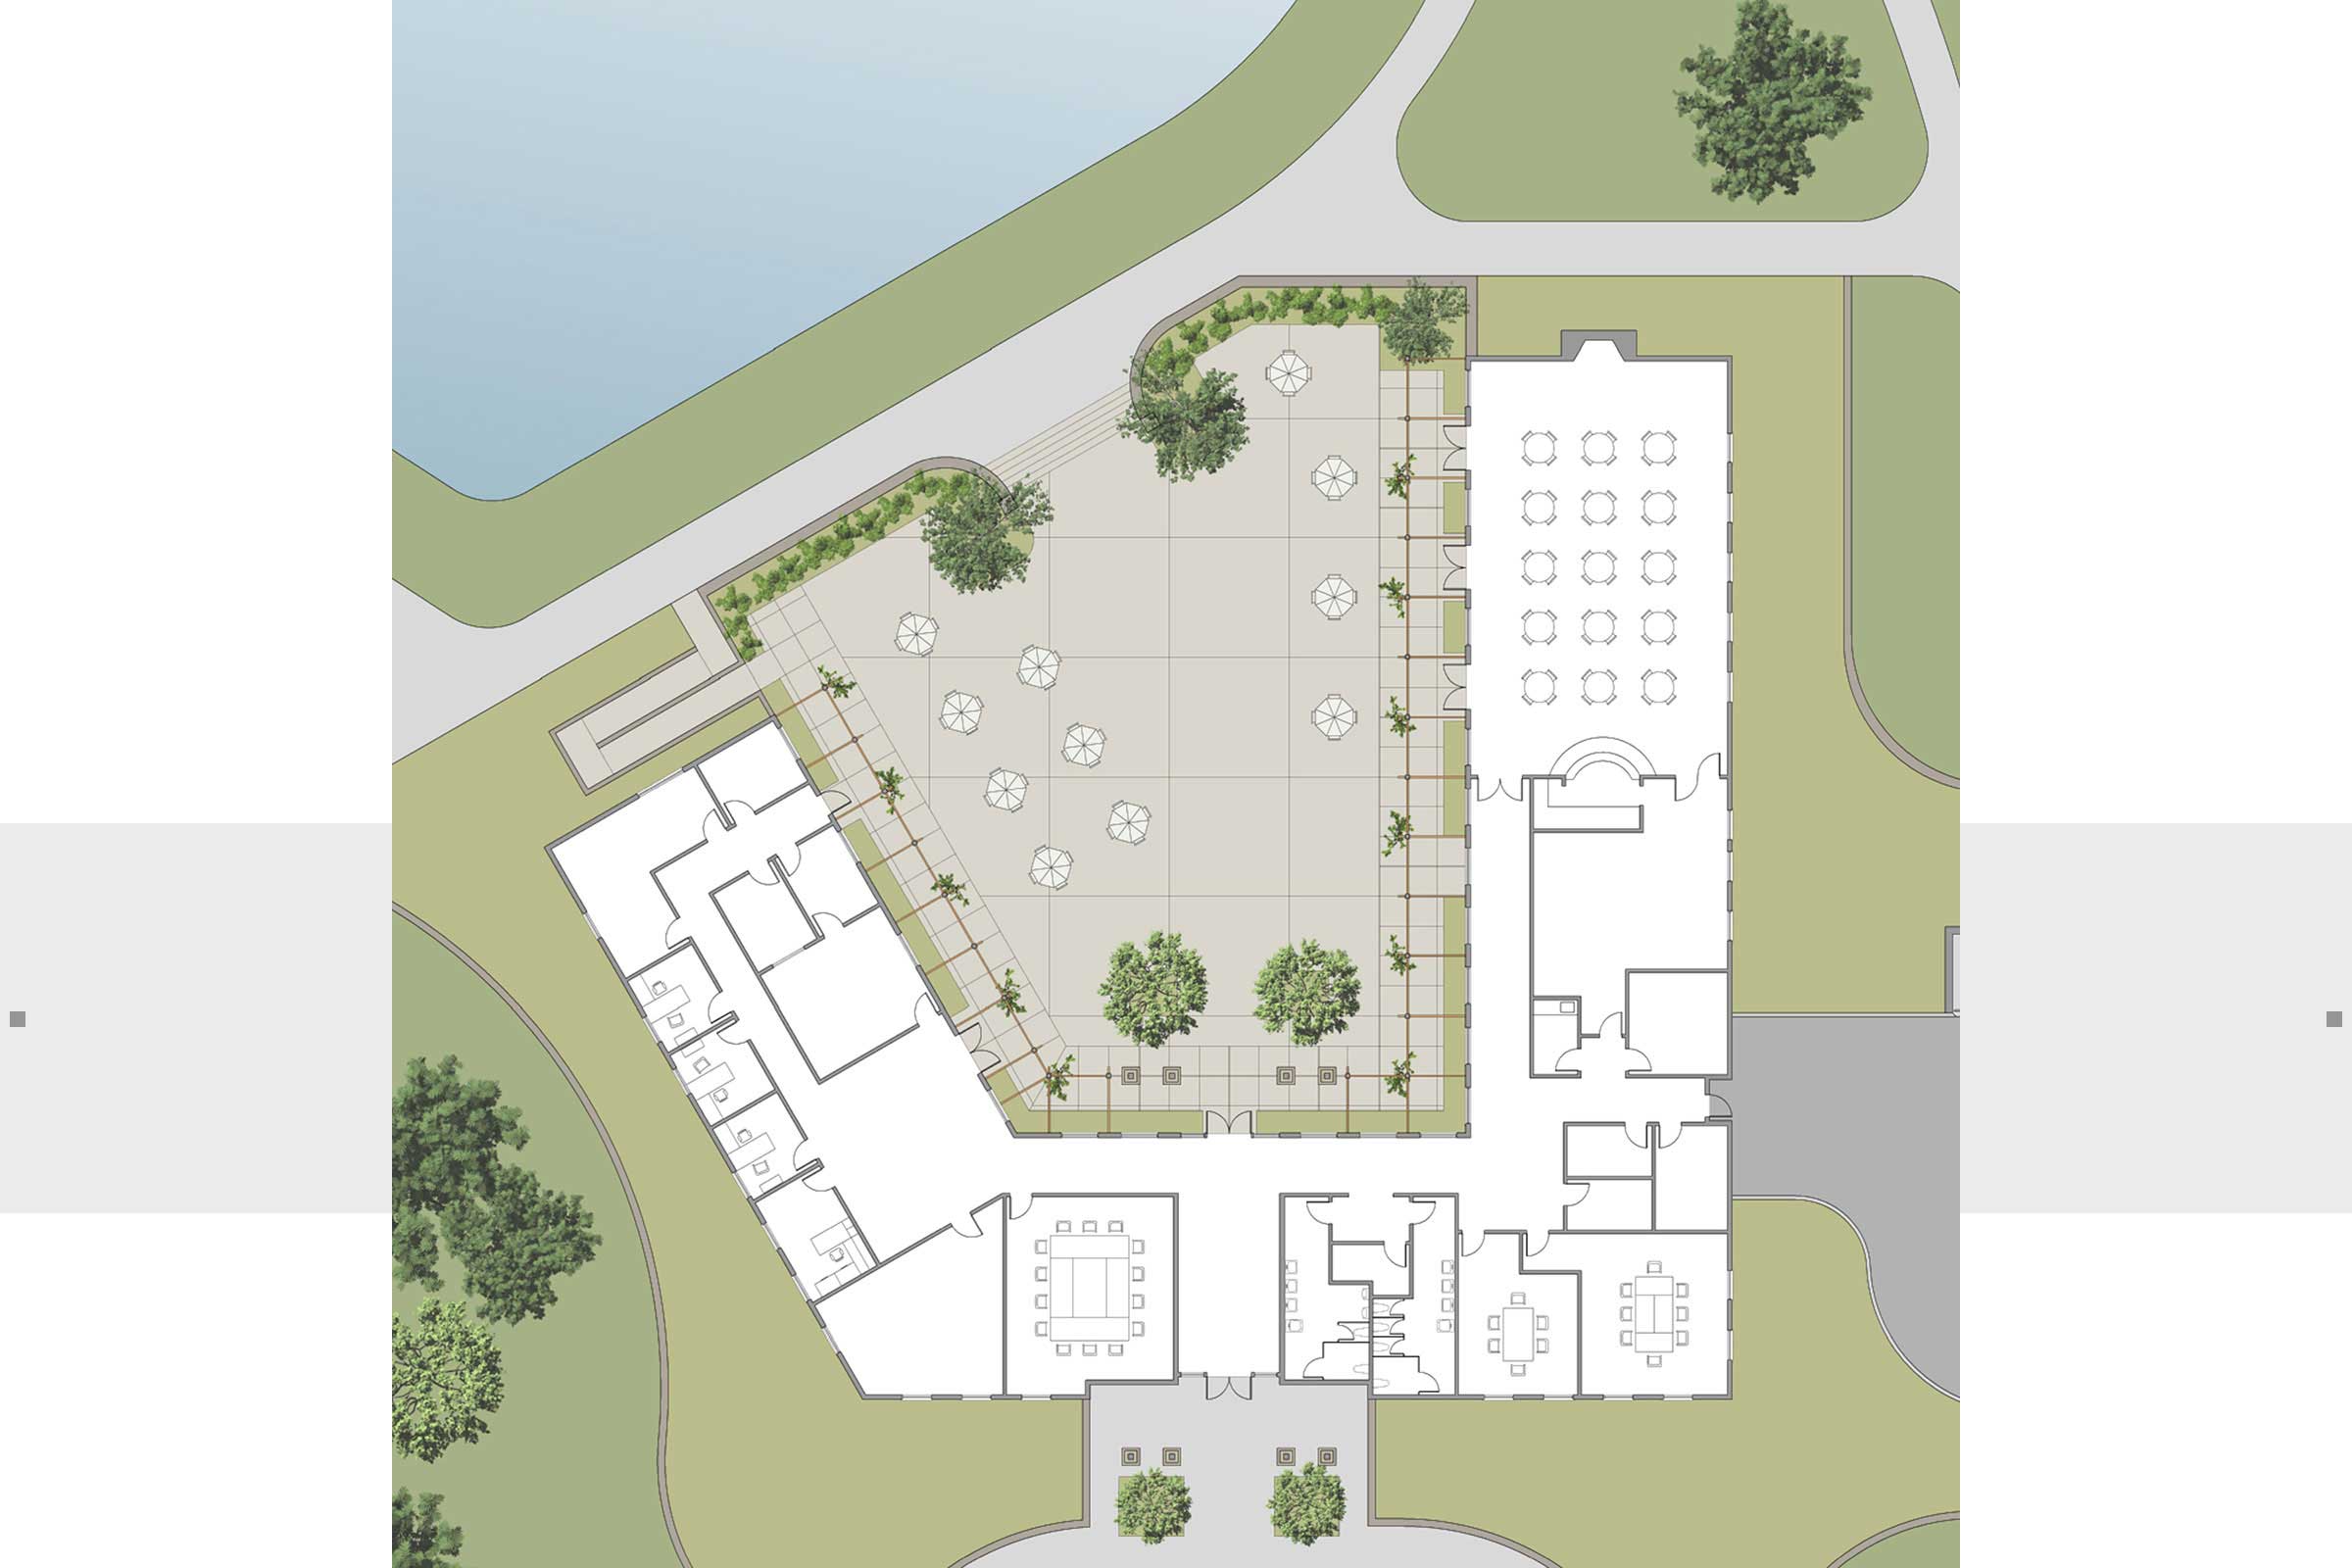 CSU rendered property layout